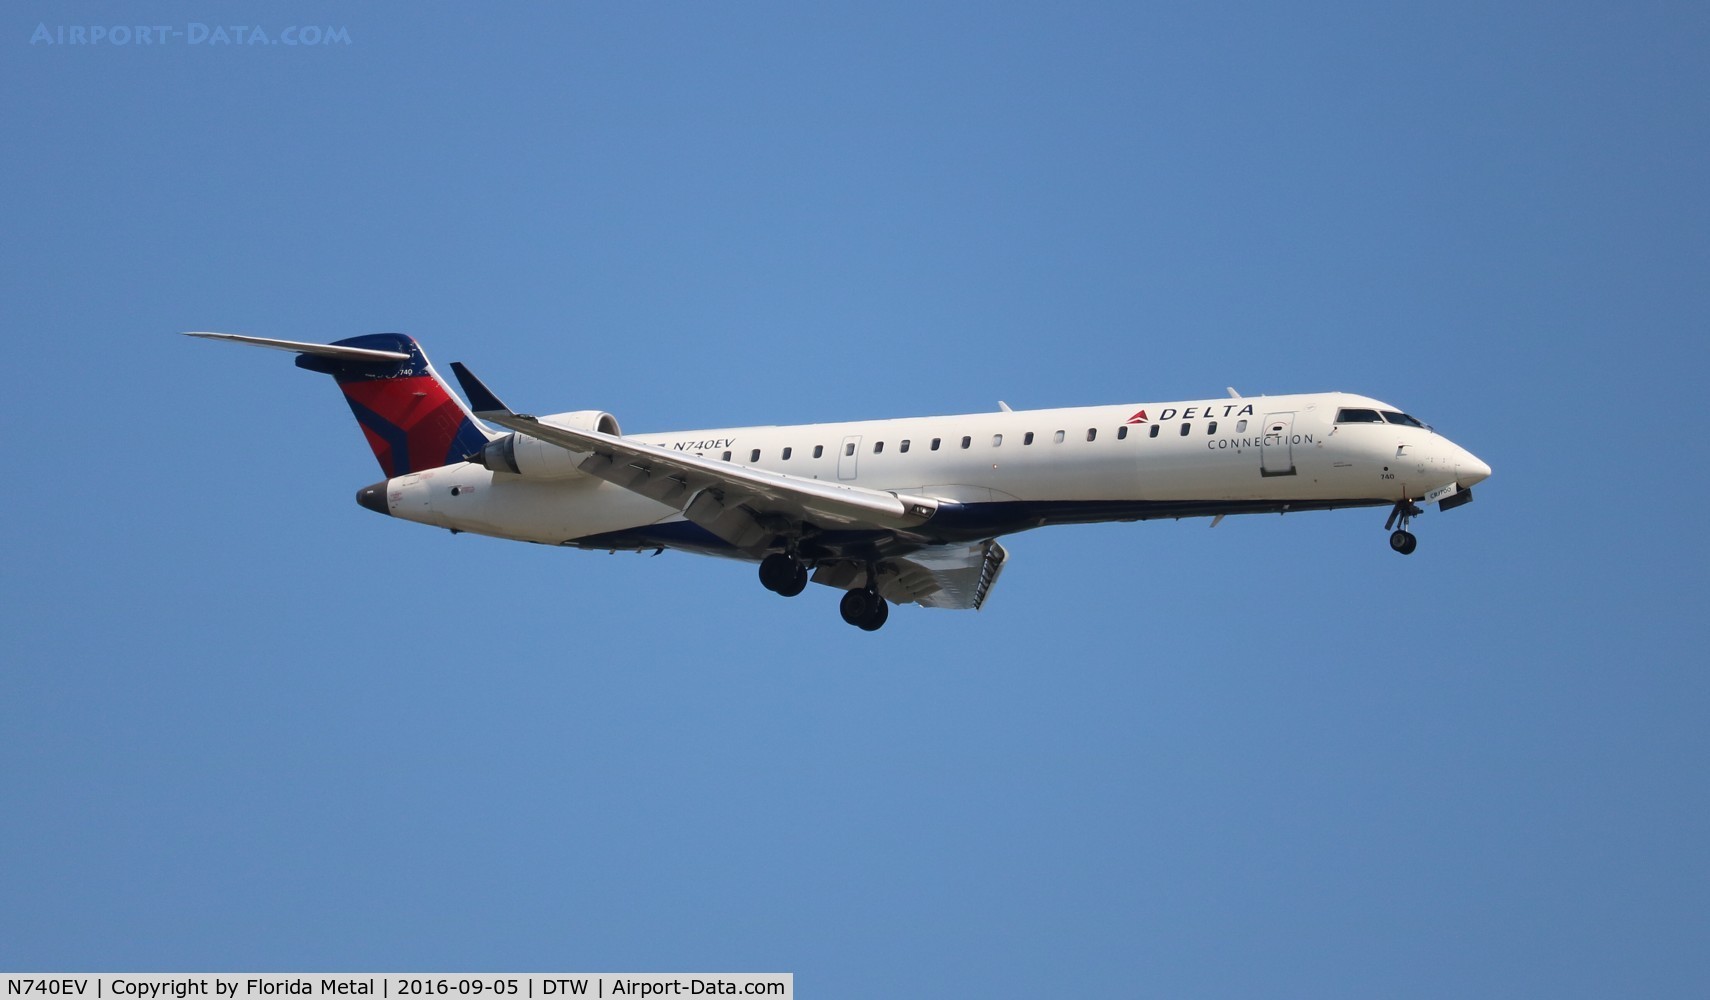 N740EV, 2004 Bombardier CRJ-701 (CL-600-2C10) Regional Jet C/N 10151, Delta Connection